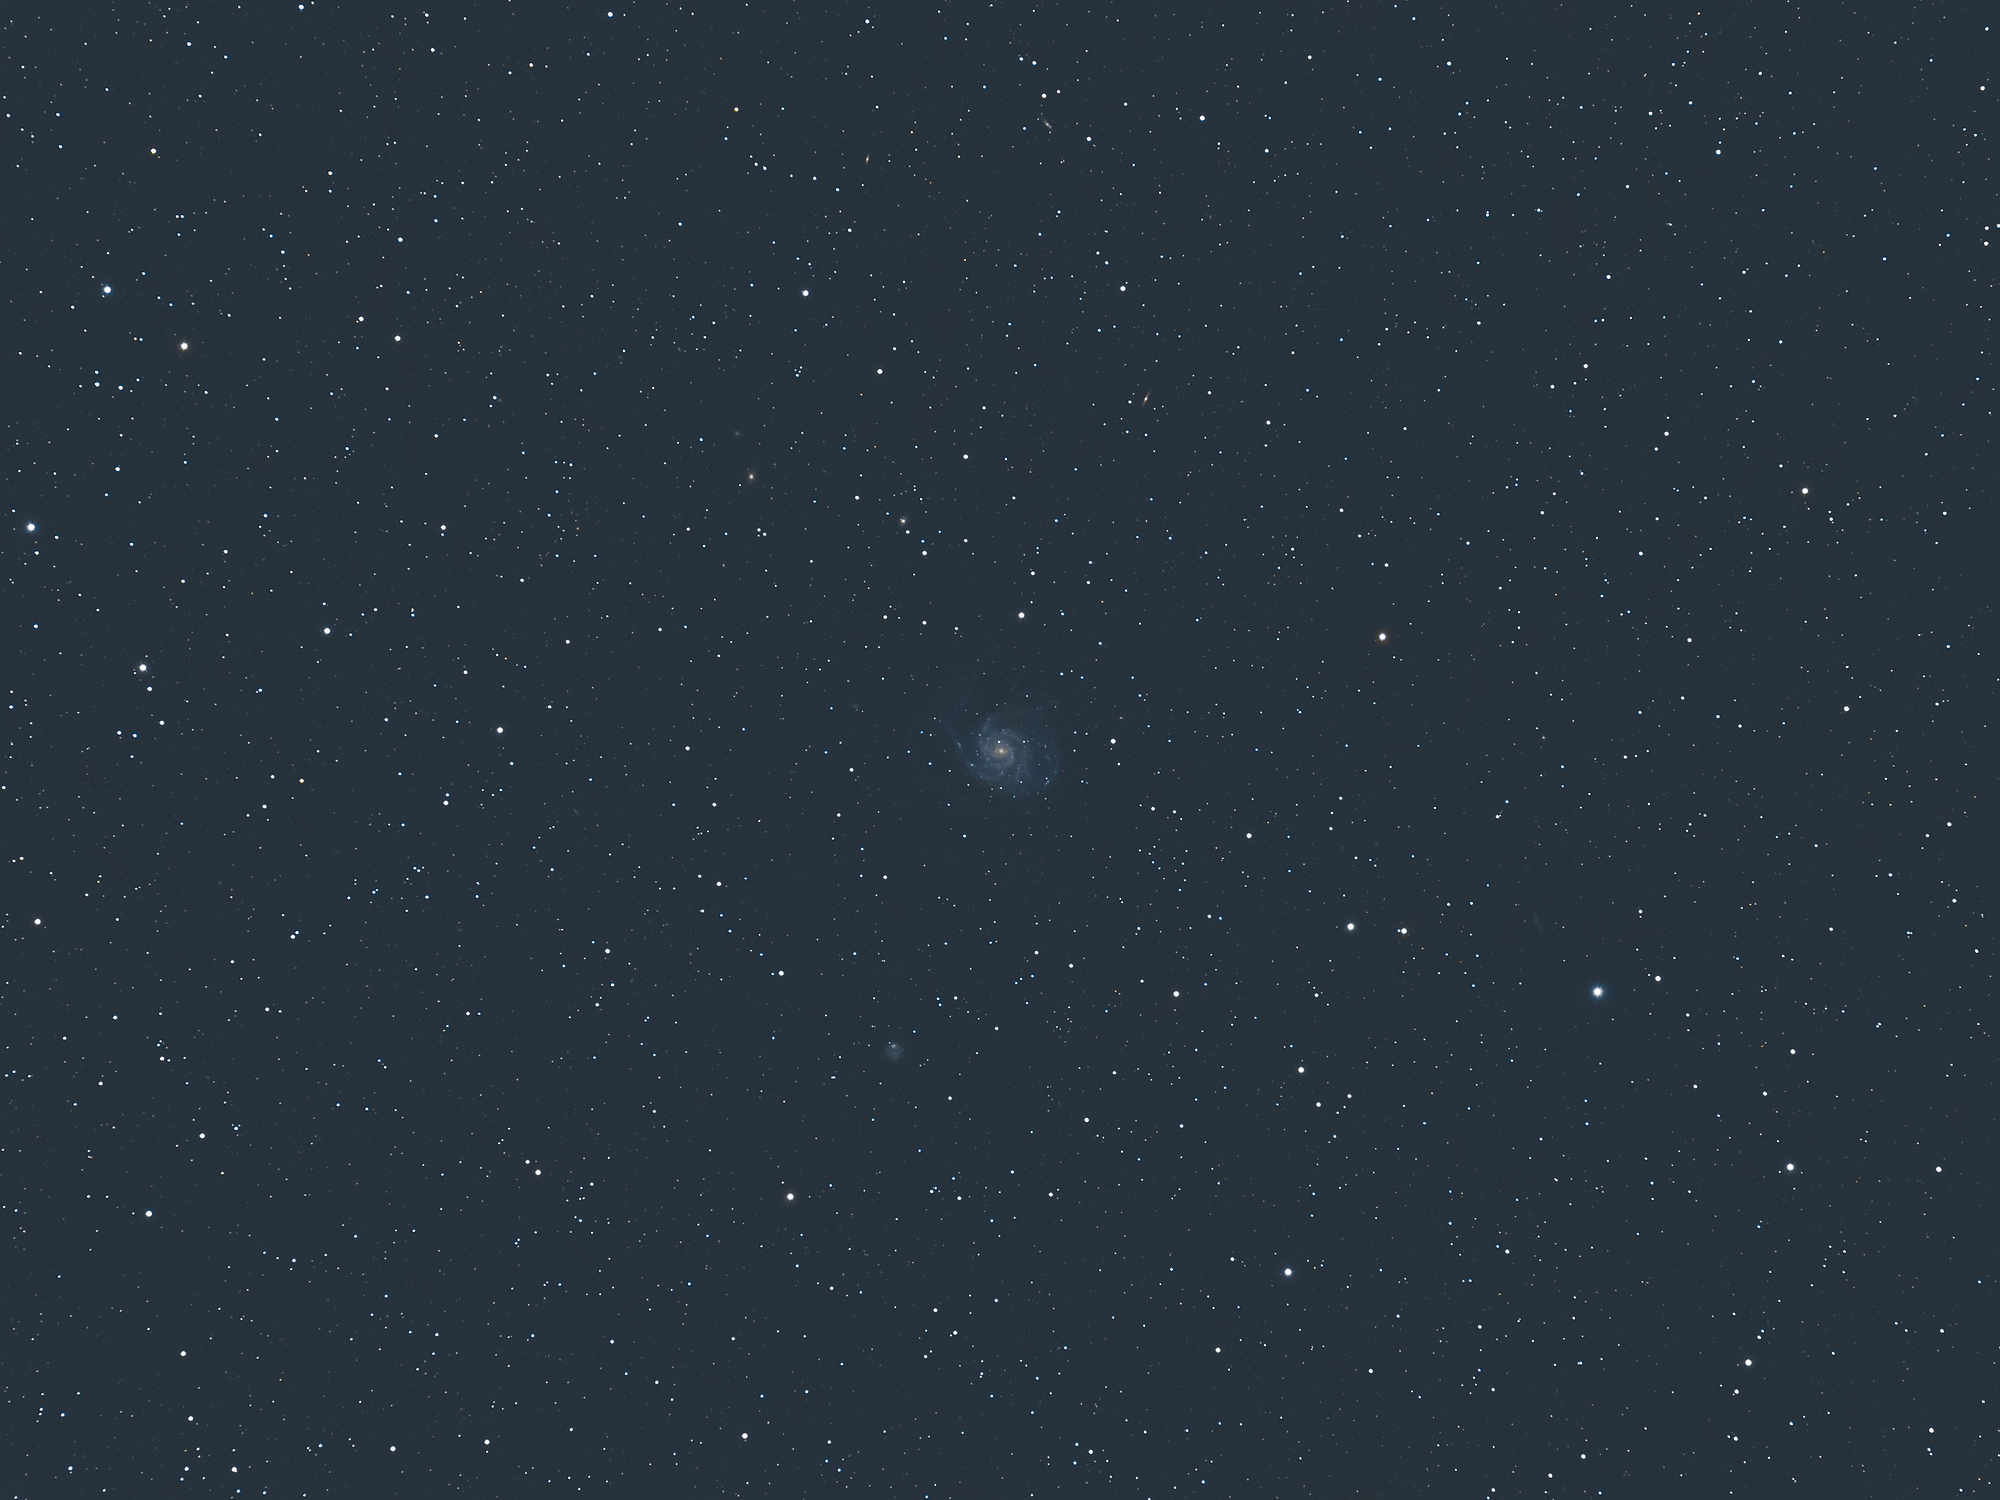 Pinwheel-Galaxie Messier 101